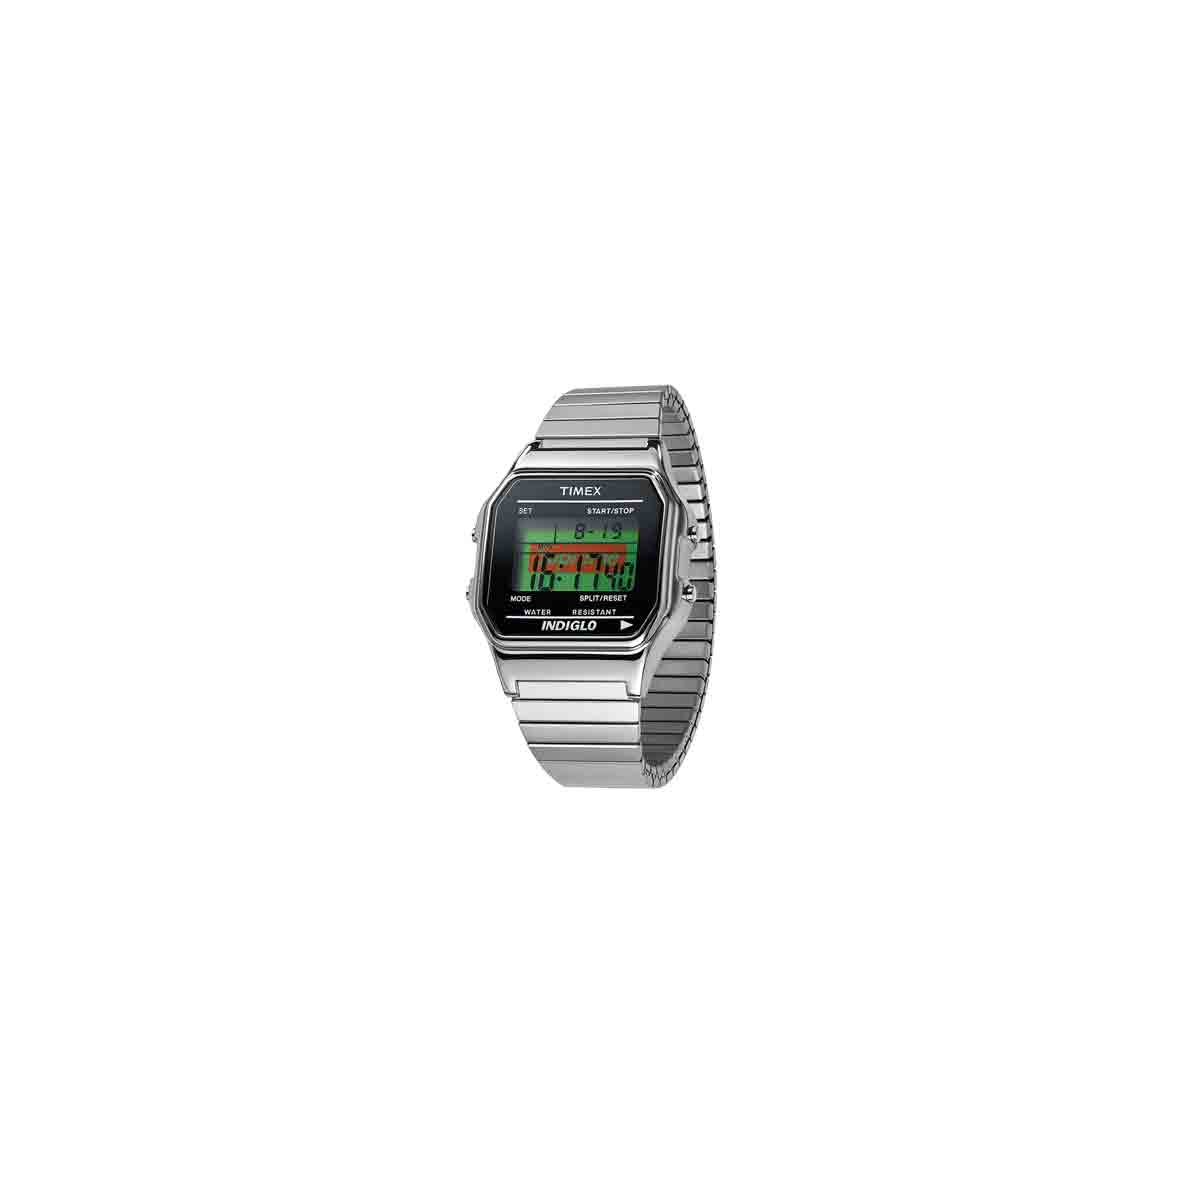 新品 Supreme Timex Digital Watch Silver時計 - dgw-widdersdorf.de